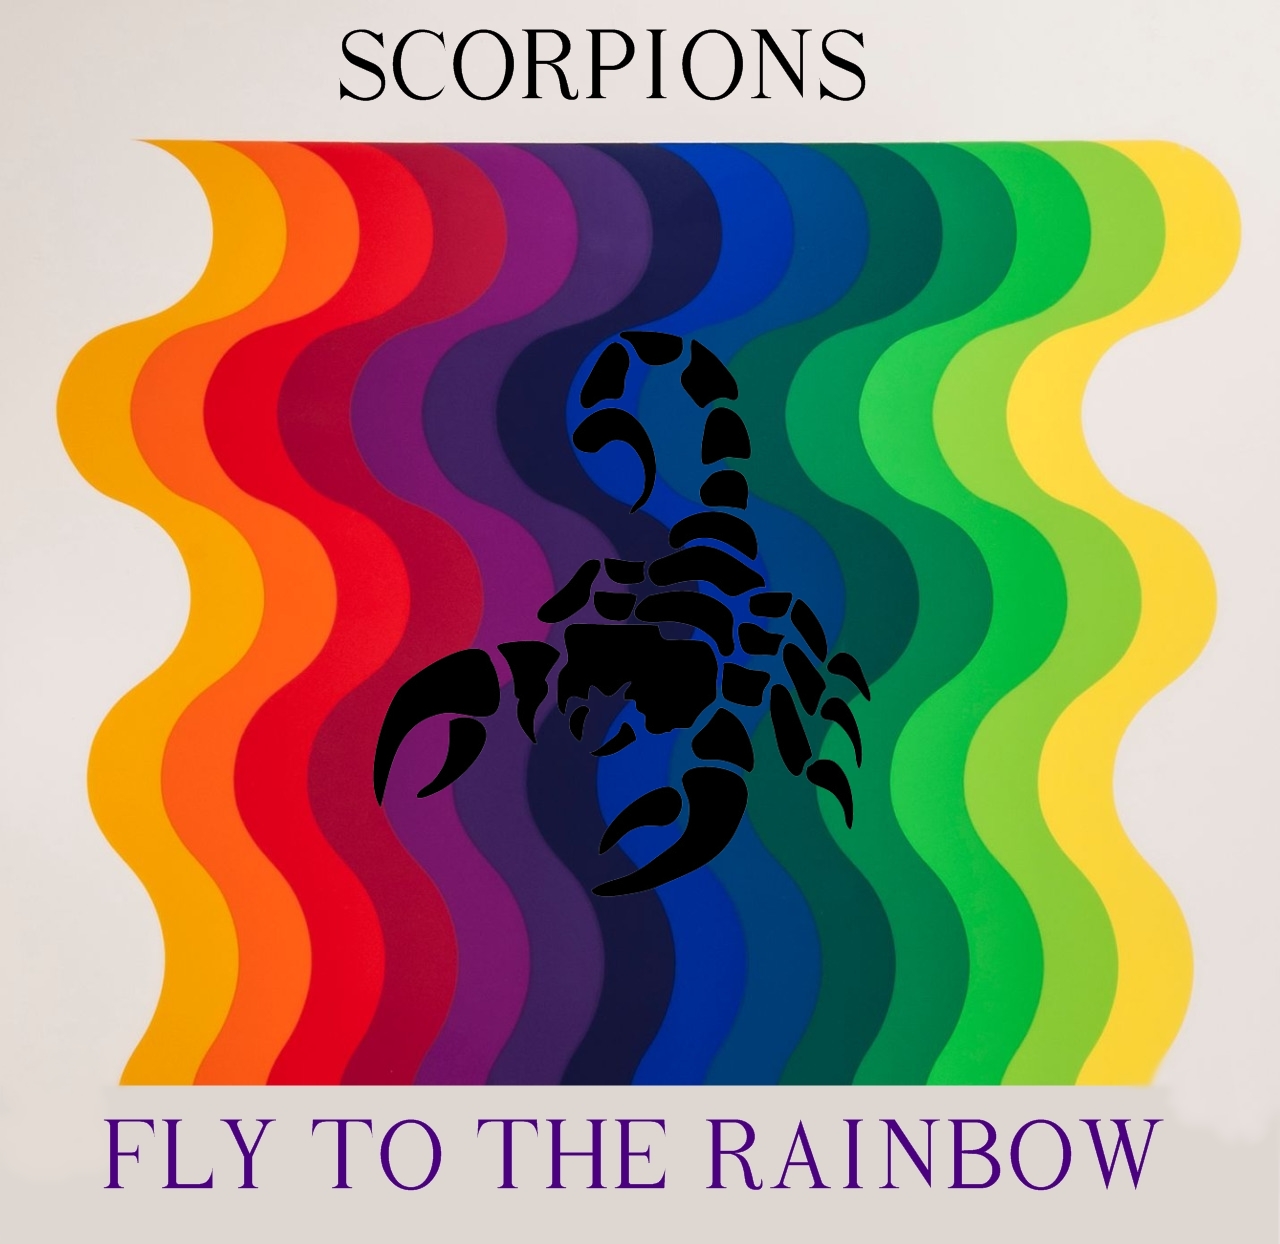 Ingeniería alemana: Scorpions - Fly To The Rainbow (1974) 🇩 🇪 club editio...